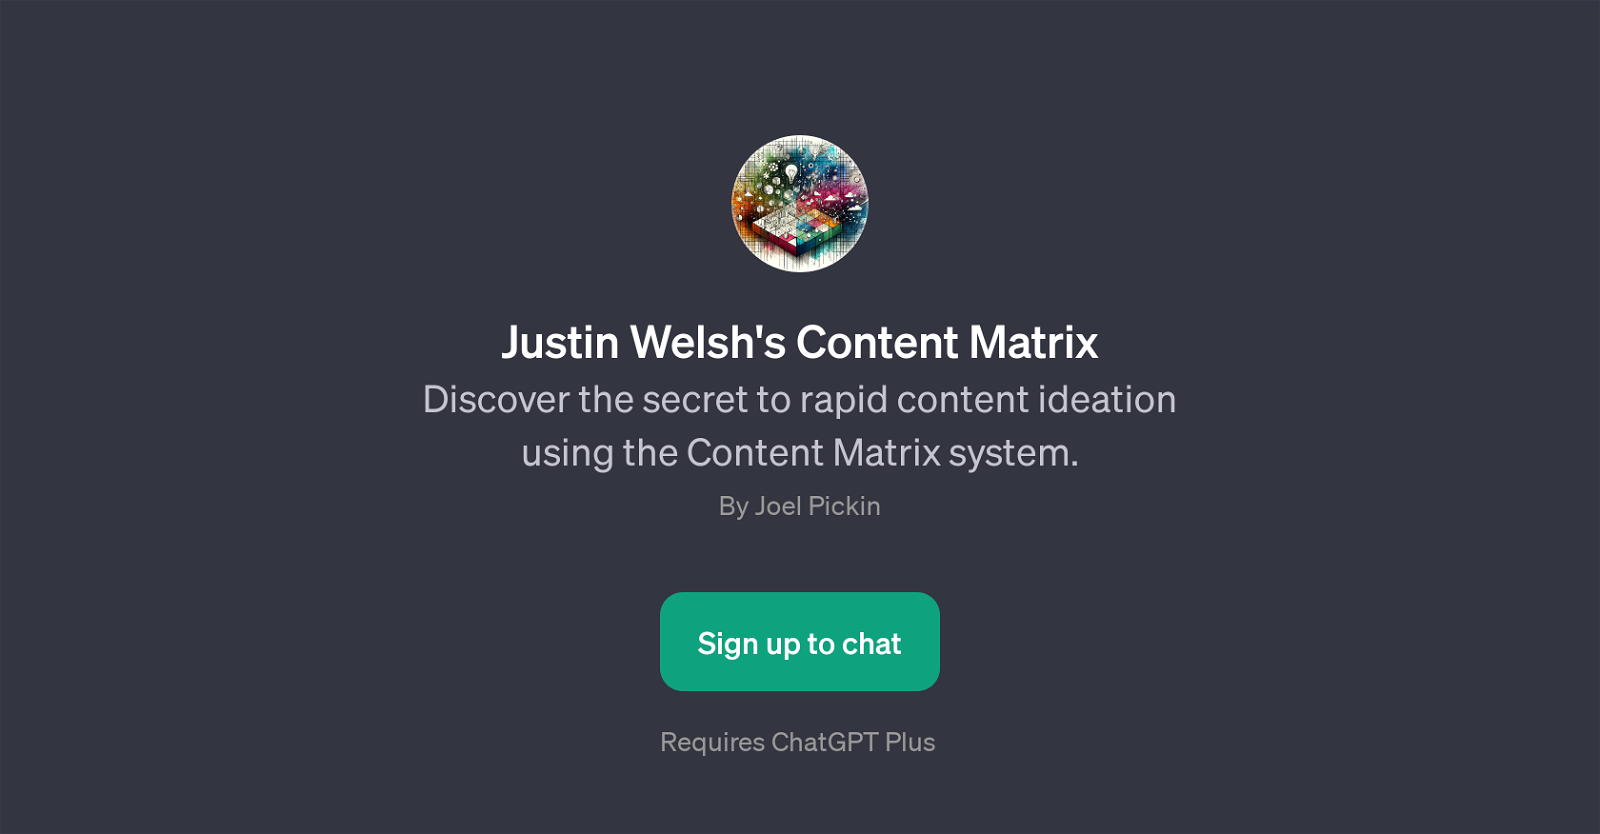 Justin Welsh's Content Matrix website